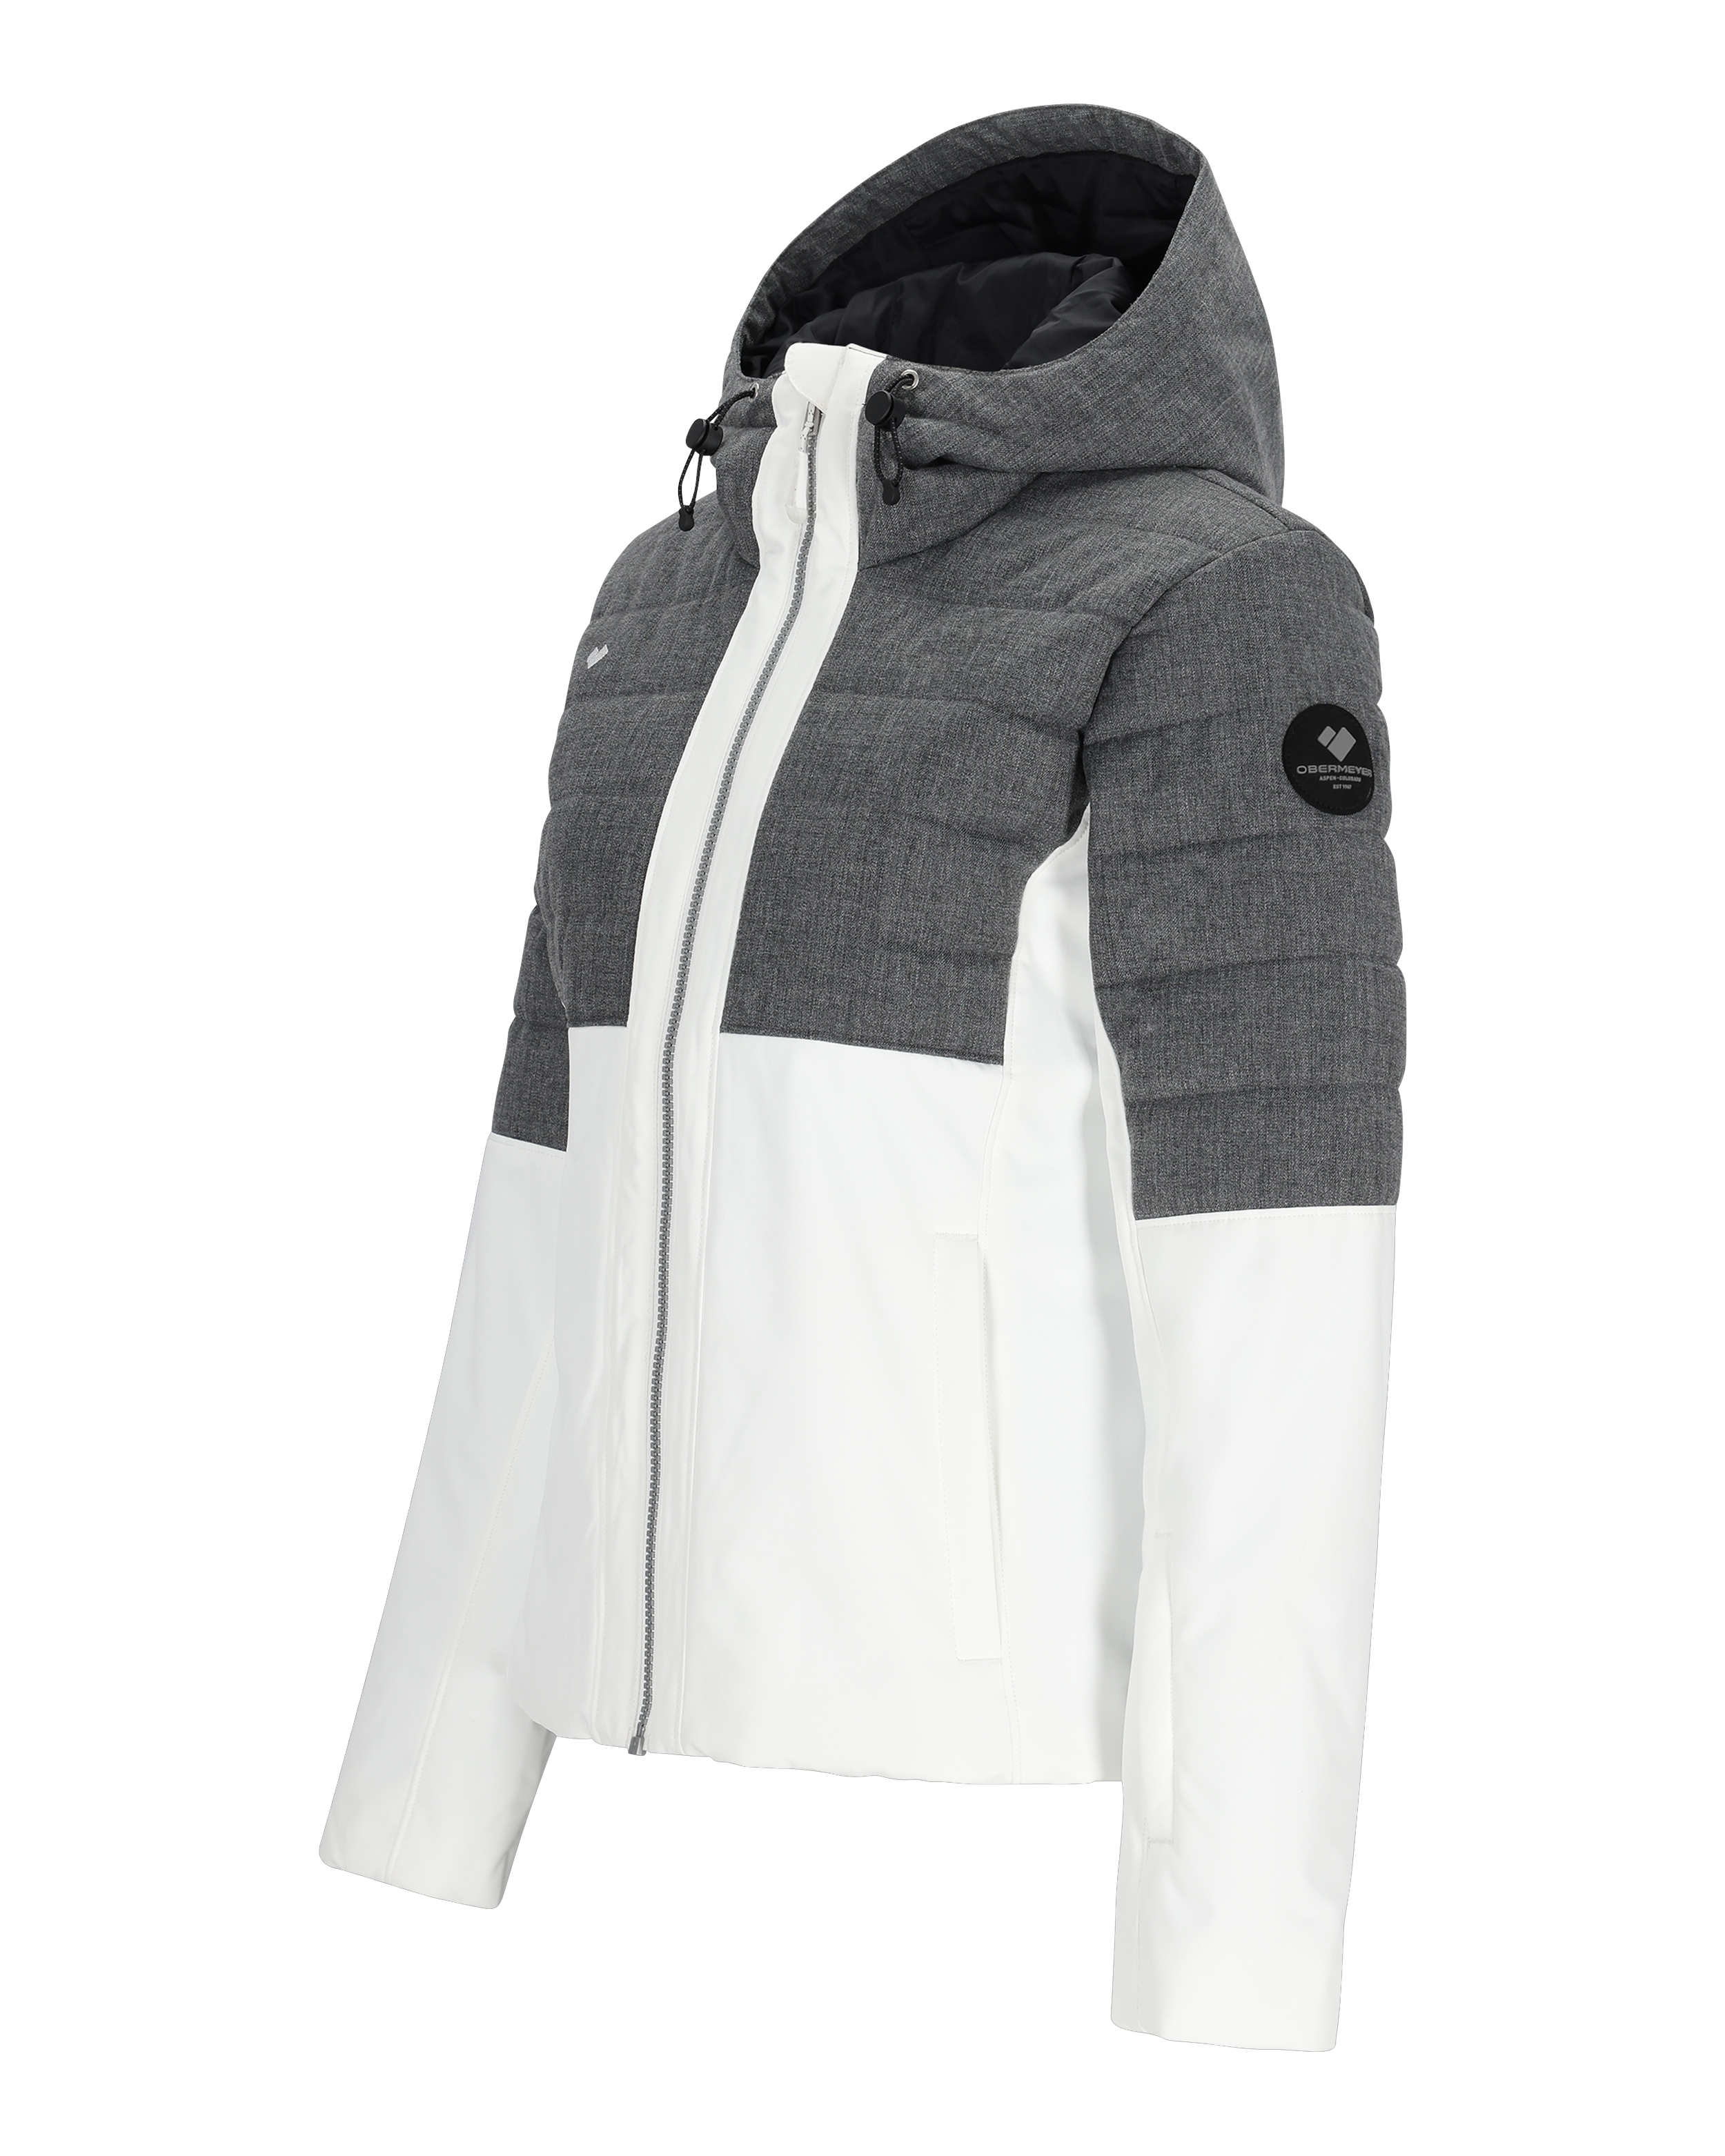 Women's Snowsport Puffer Jacket - All In Motion™ Black XXL